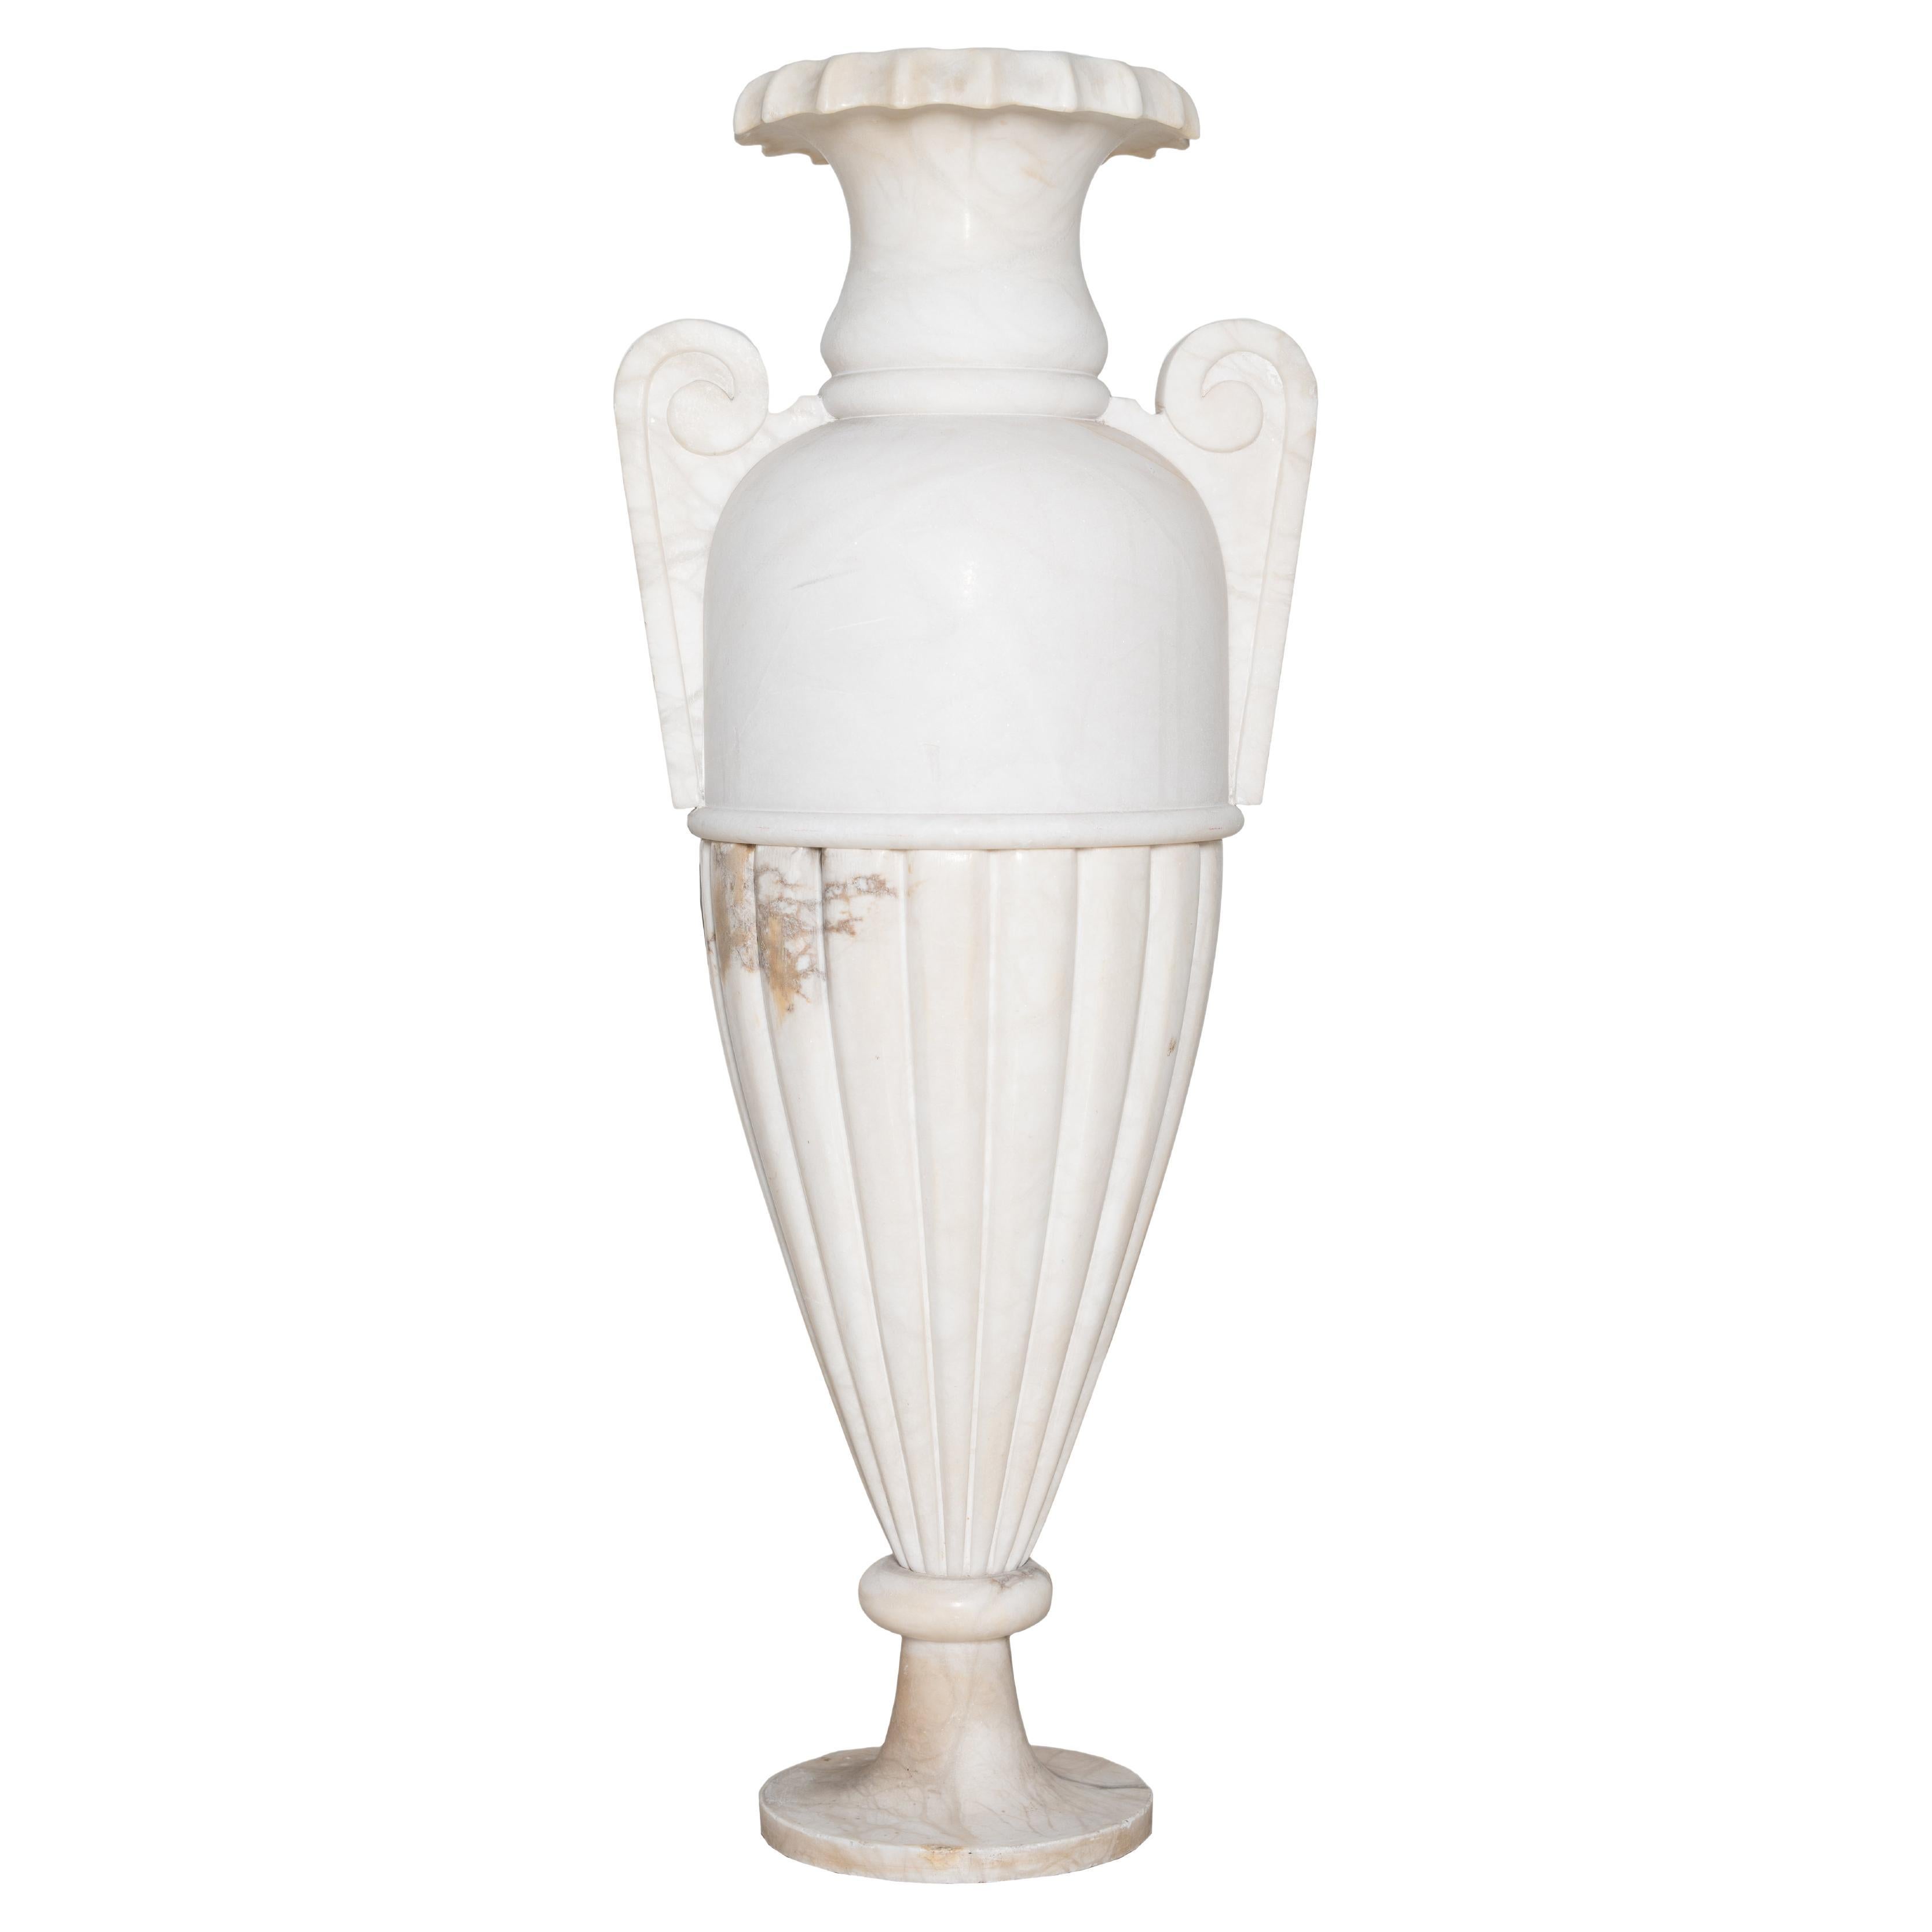 Amphora-shaped lamp in alabaster